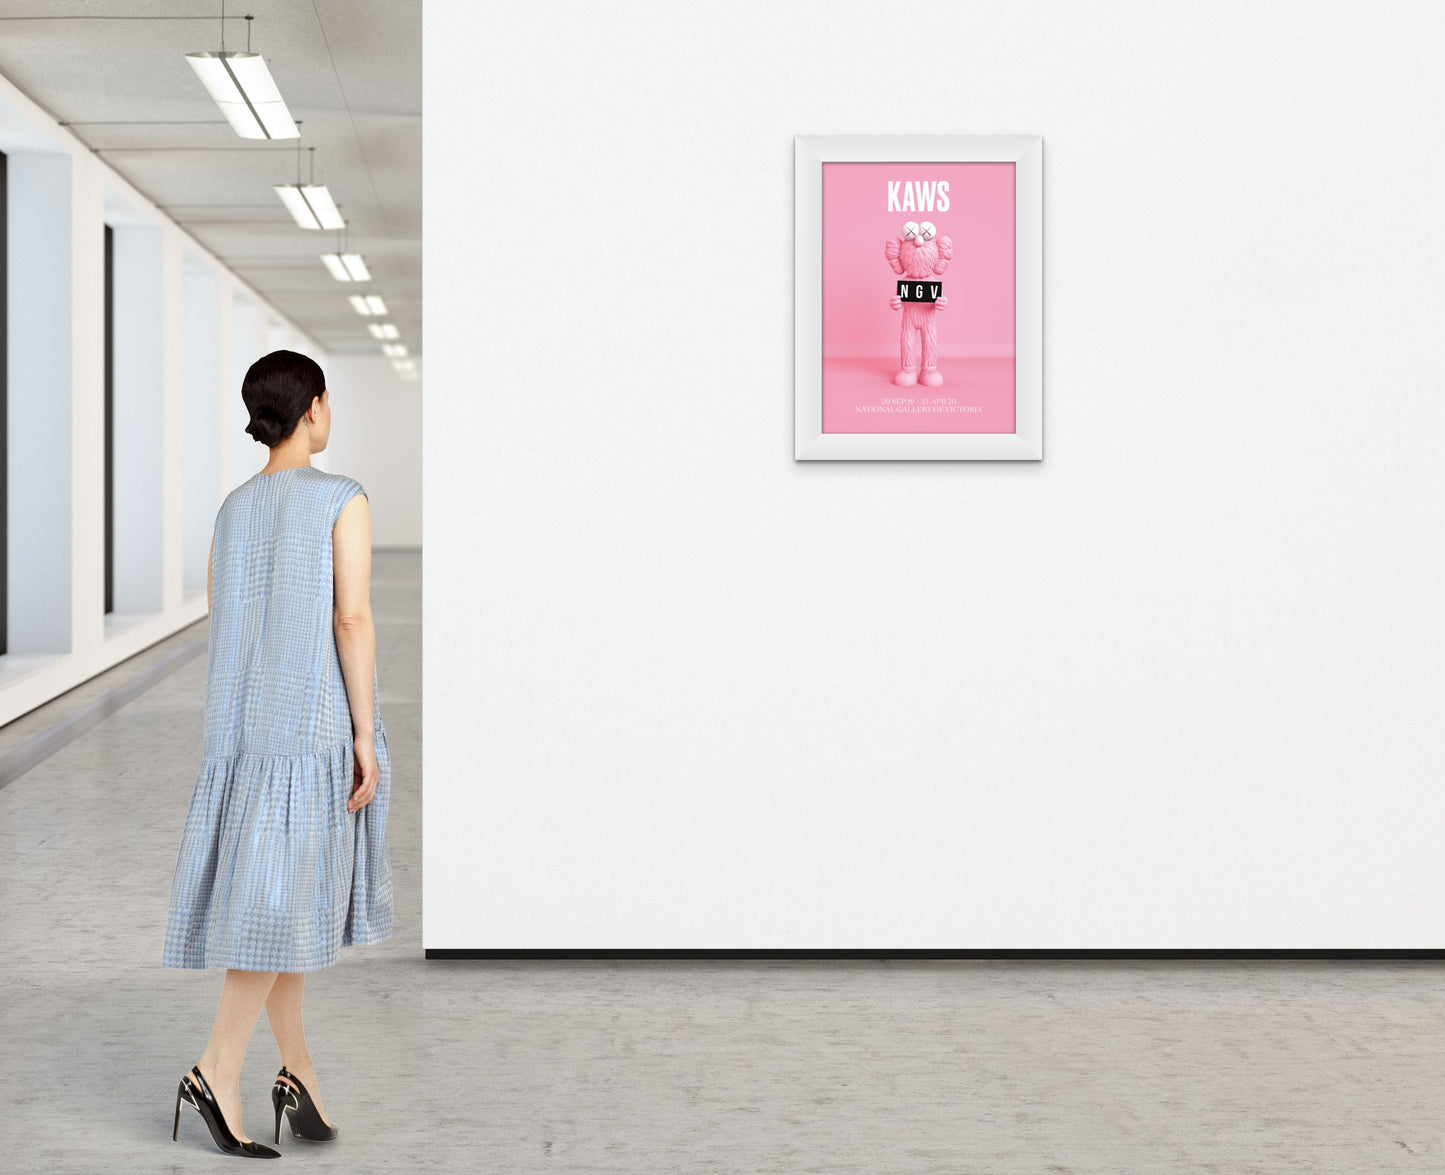 KAWS x NGV BFF Framed Poster (Pink, Blue), 2019